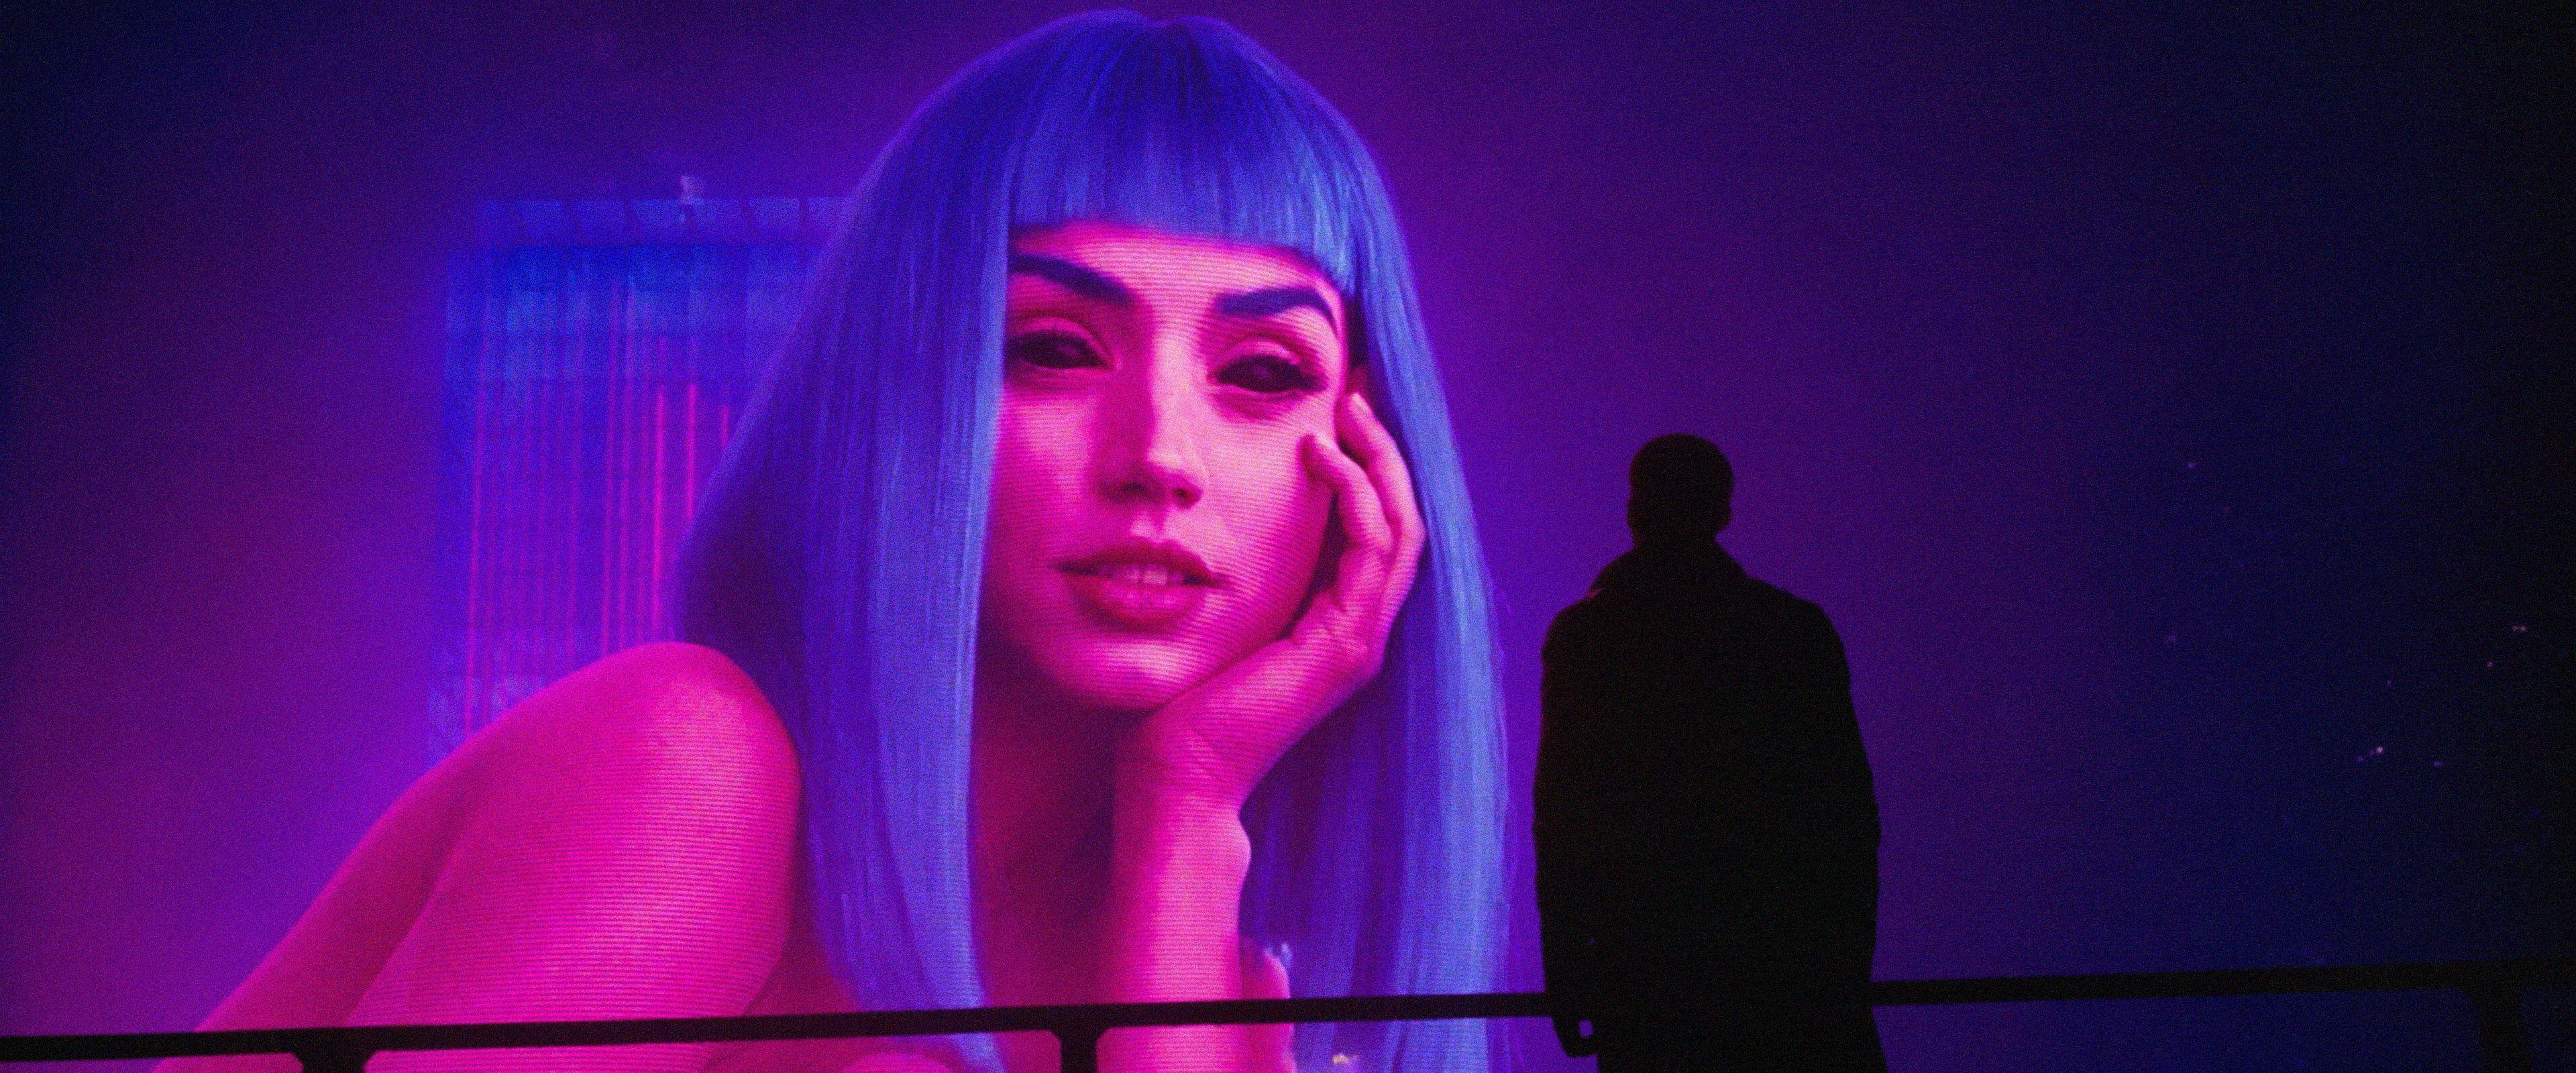 Blade Runner 2049: The Blue-Haired Girl's Identity Revealed - wide 3